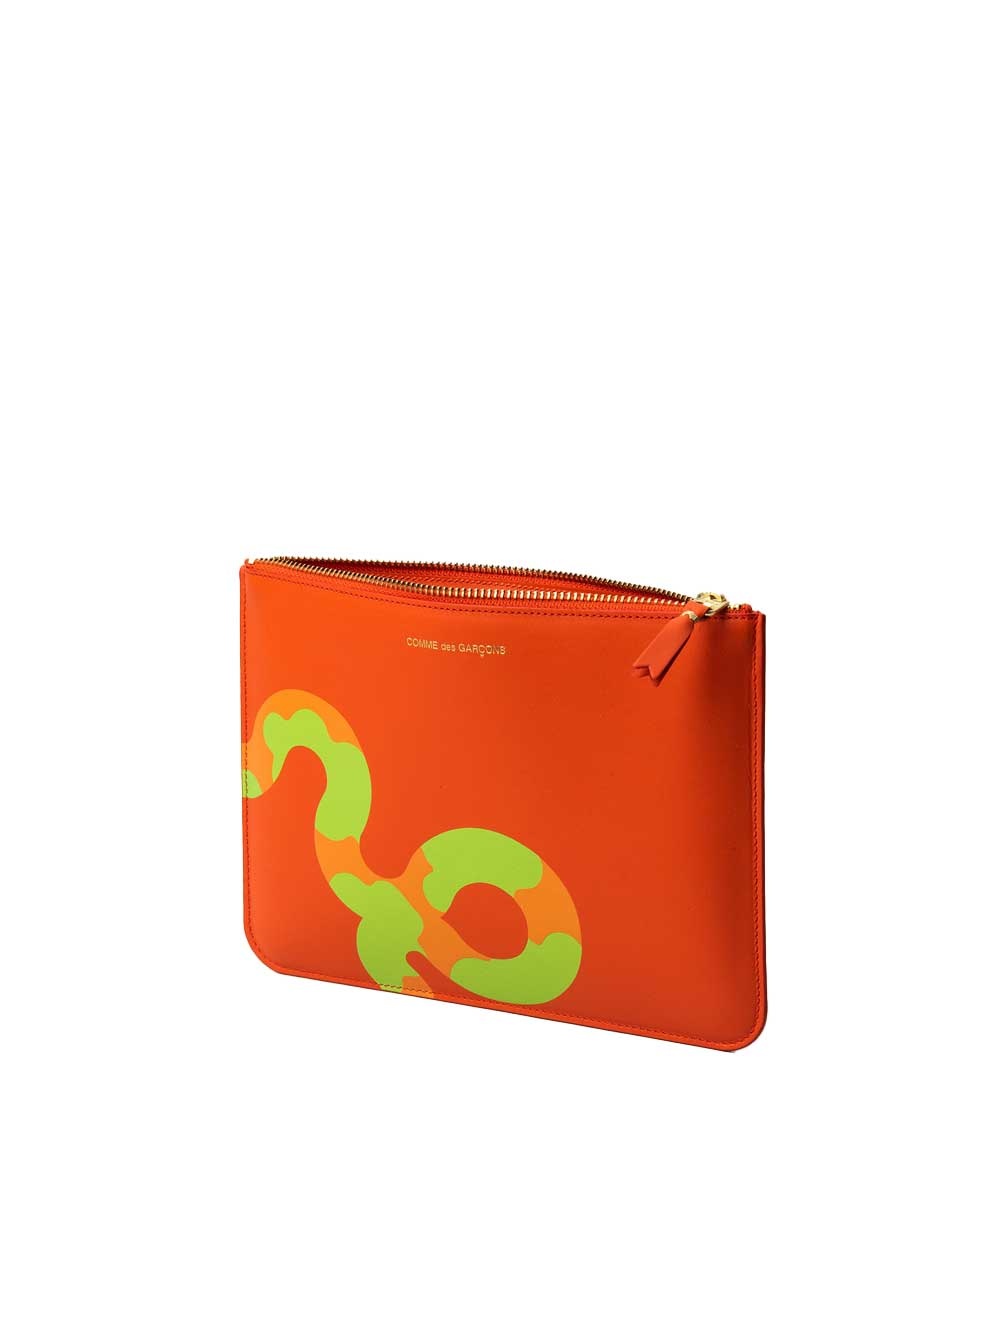 Clutch Bag In Orange Special Edition - 3